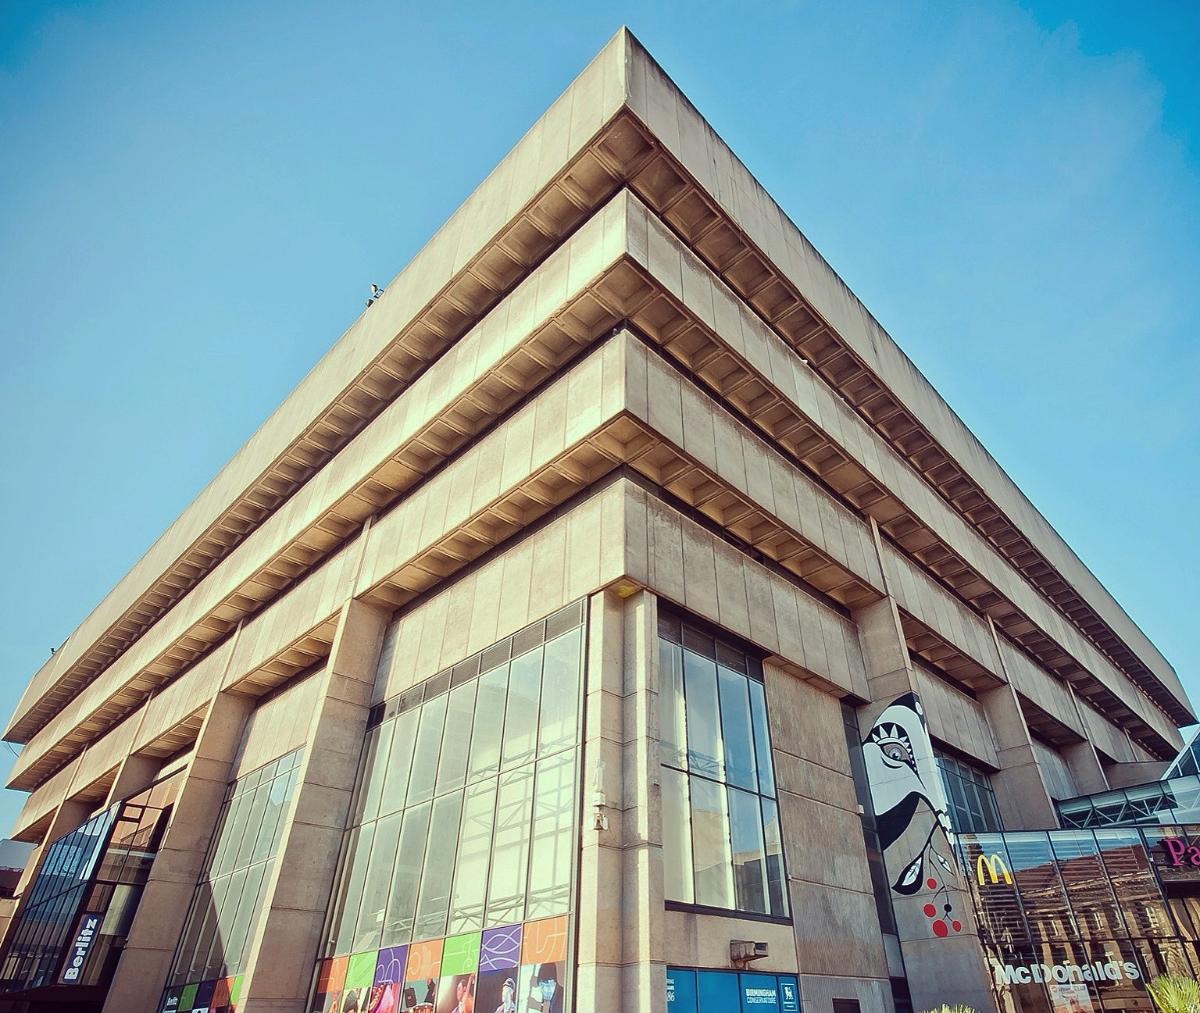 Birmingham Central Library (1974) designed by John Madin 